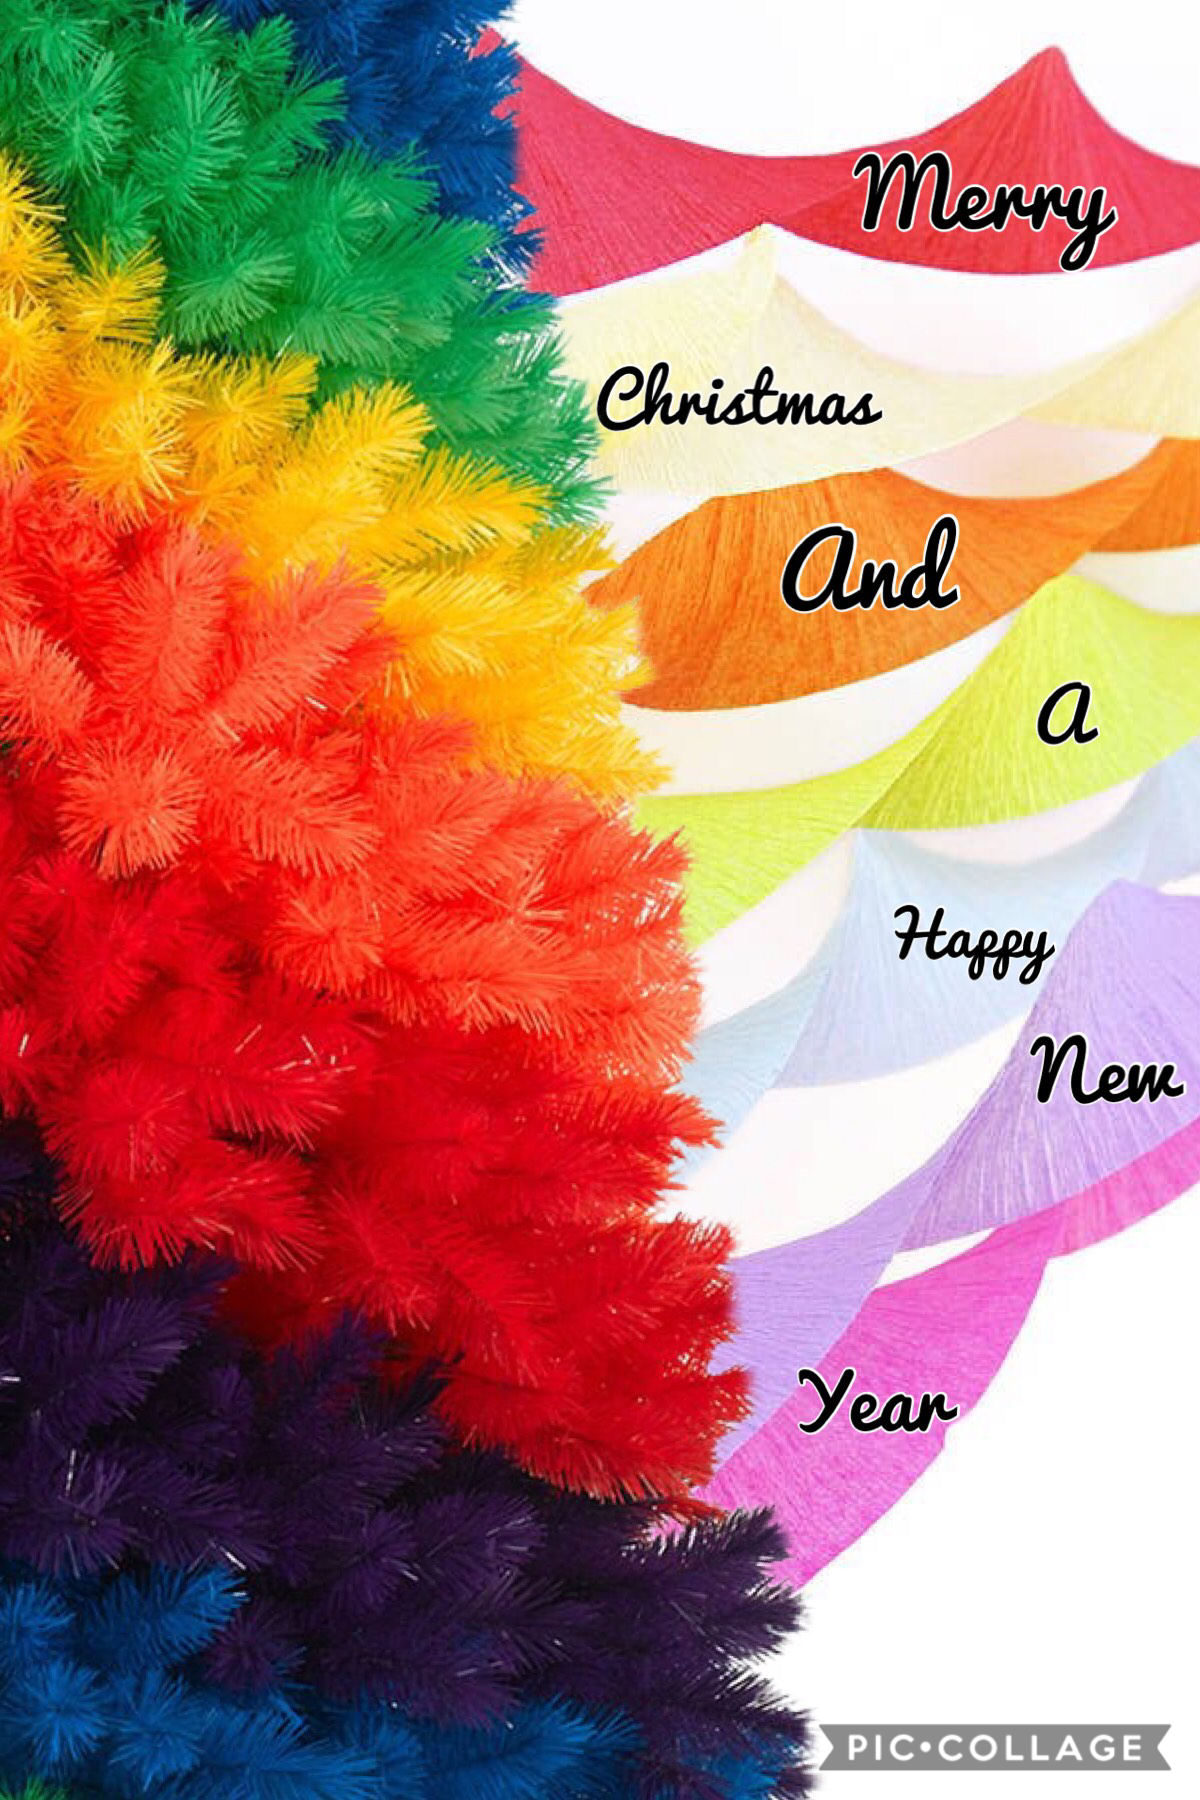 #RainbowWinterWonderland / Merry Christmas and a Happy New Year!